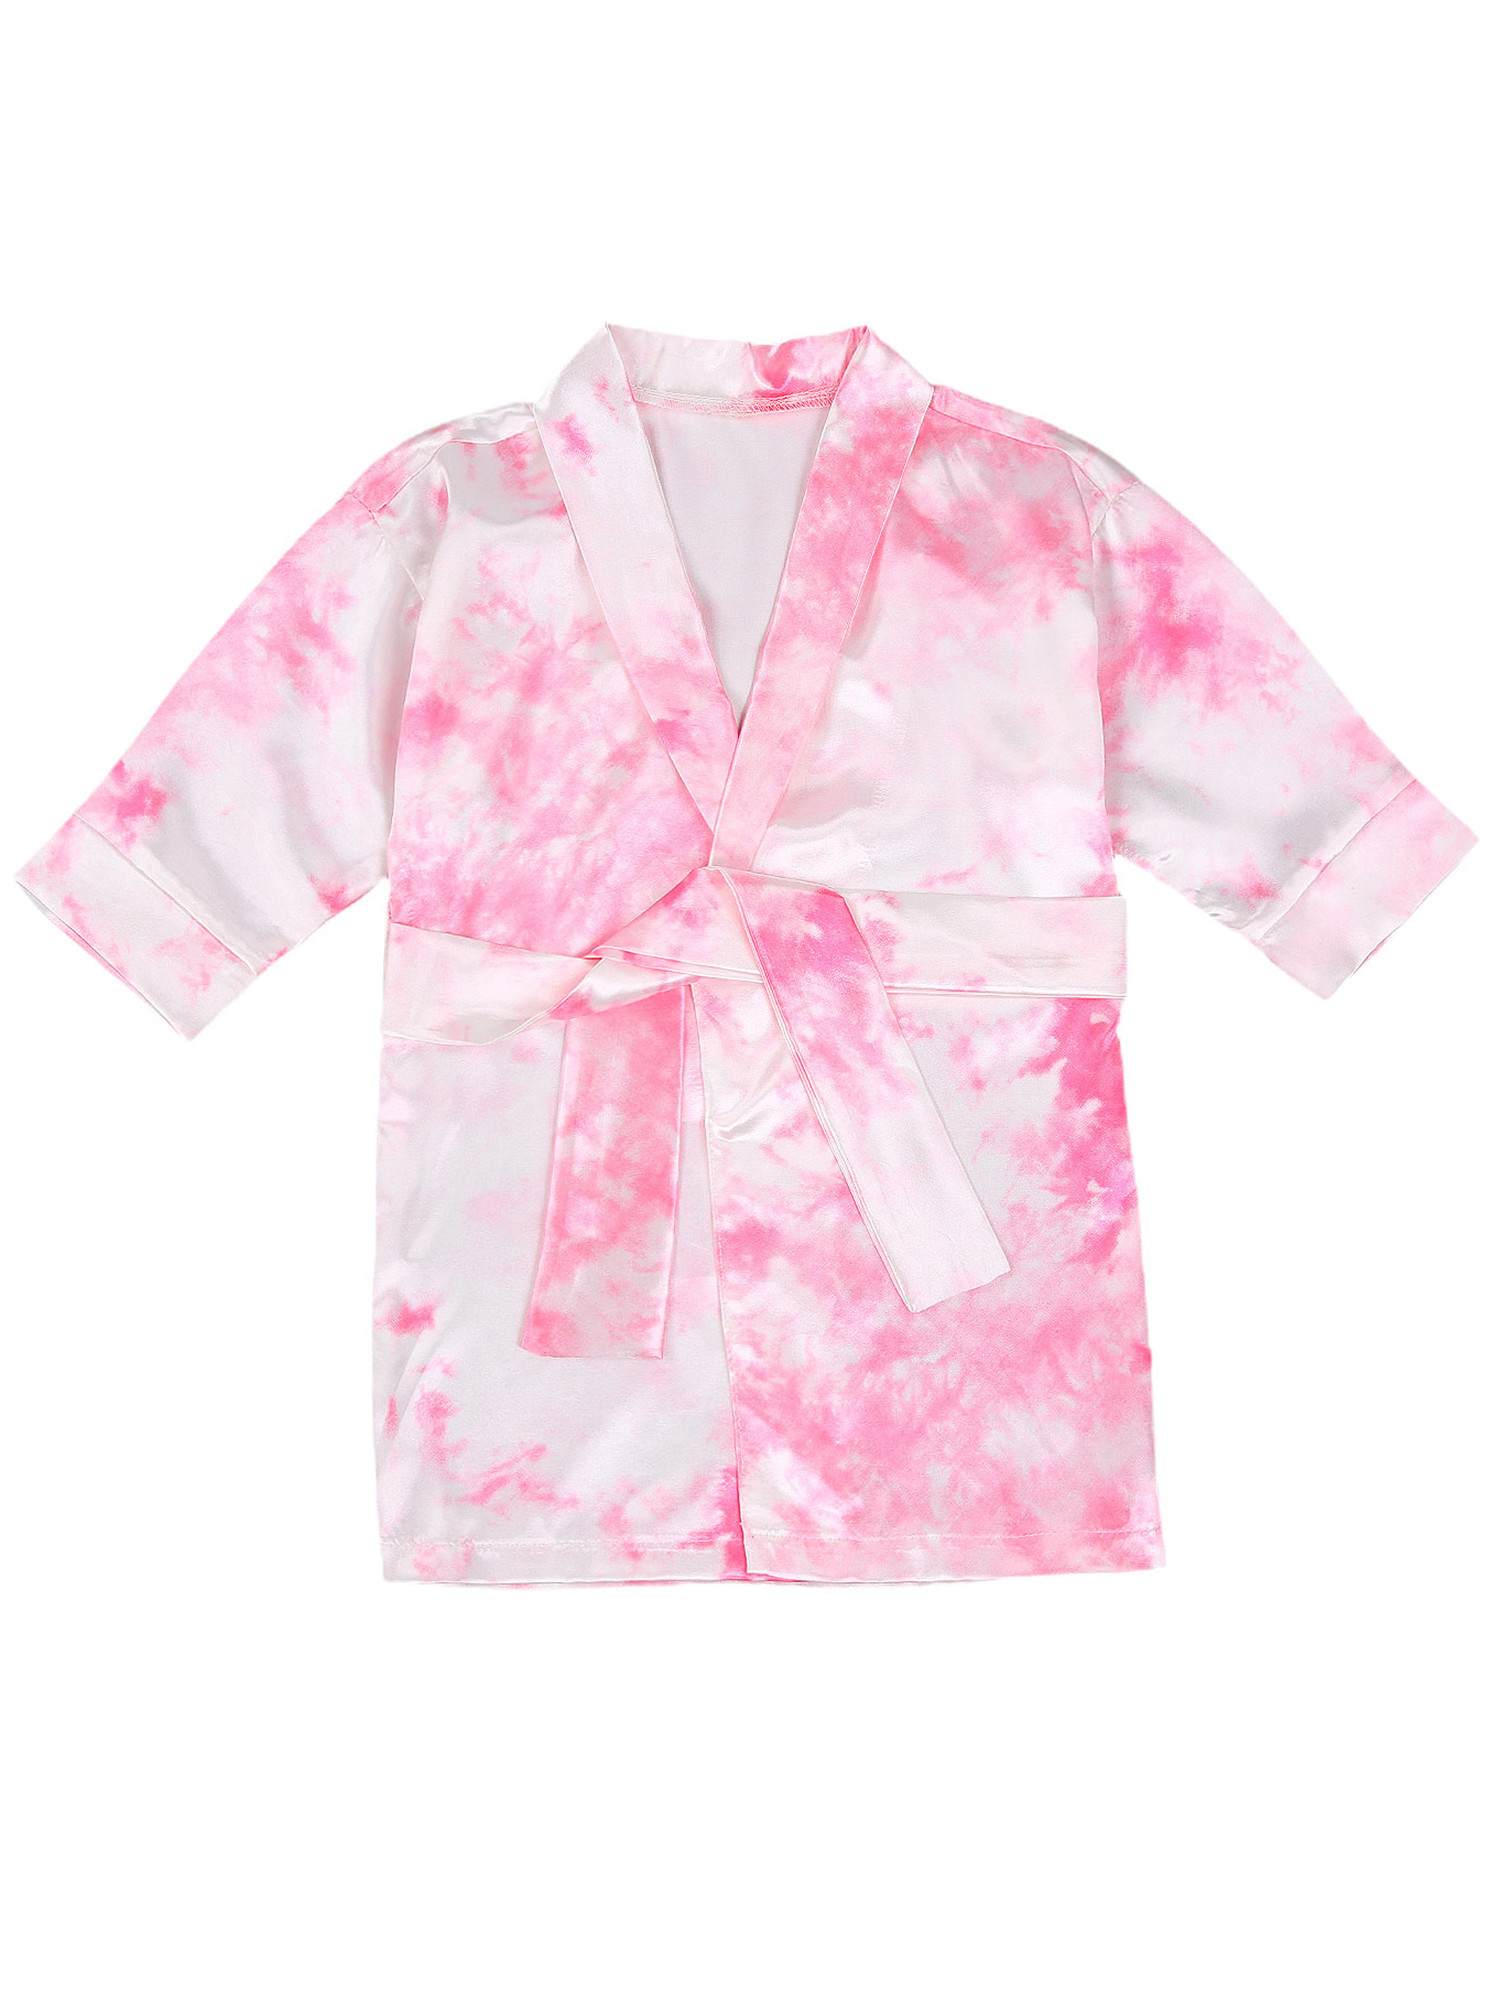 Aunavey Baby Girl Silk Satin Gown Sleepwear Plain Kimono Robe Toddler Kids Nightwear - image 1 of 6